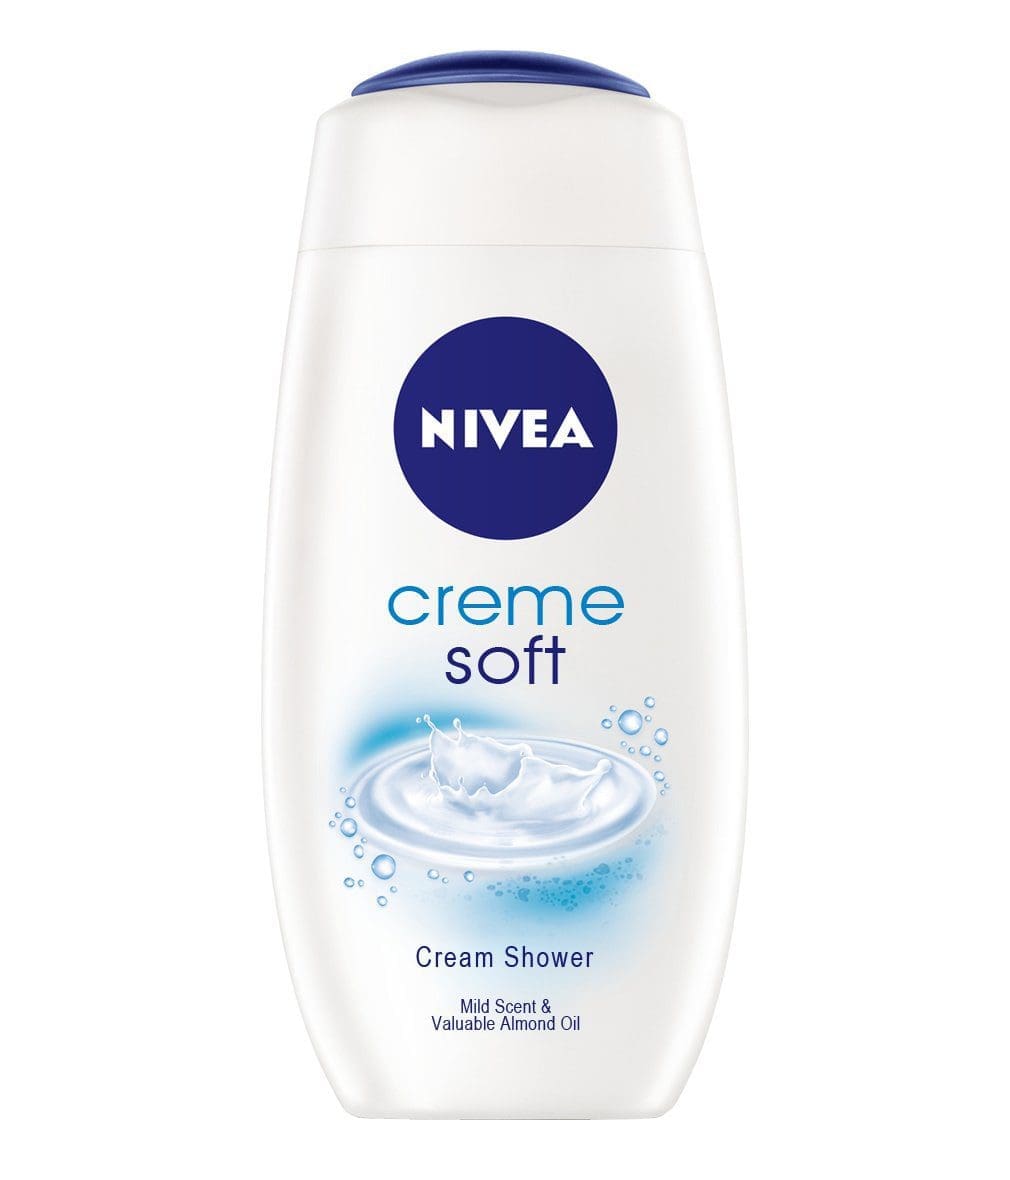 Nivea Crème Soft Cream Shower for Women - 250ml